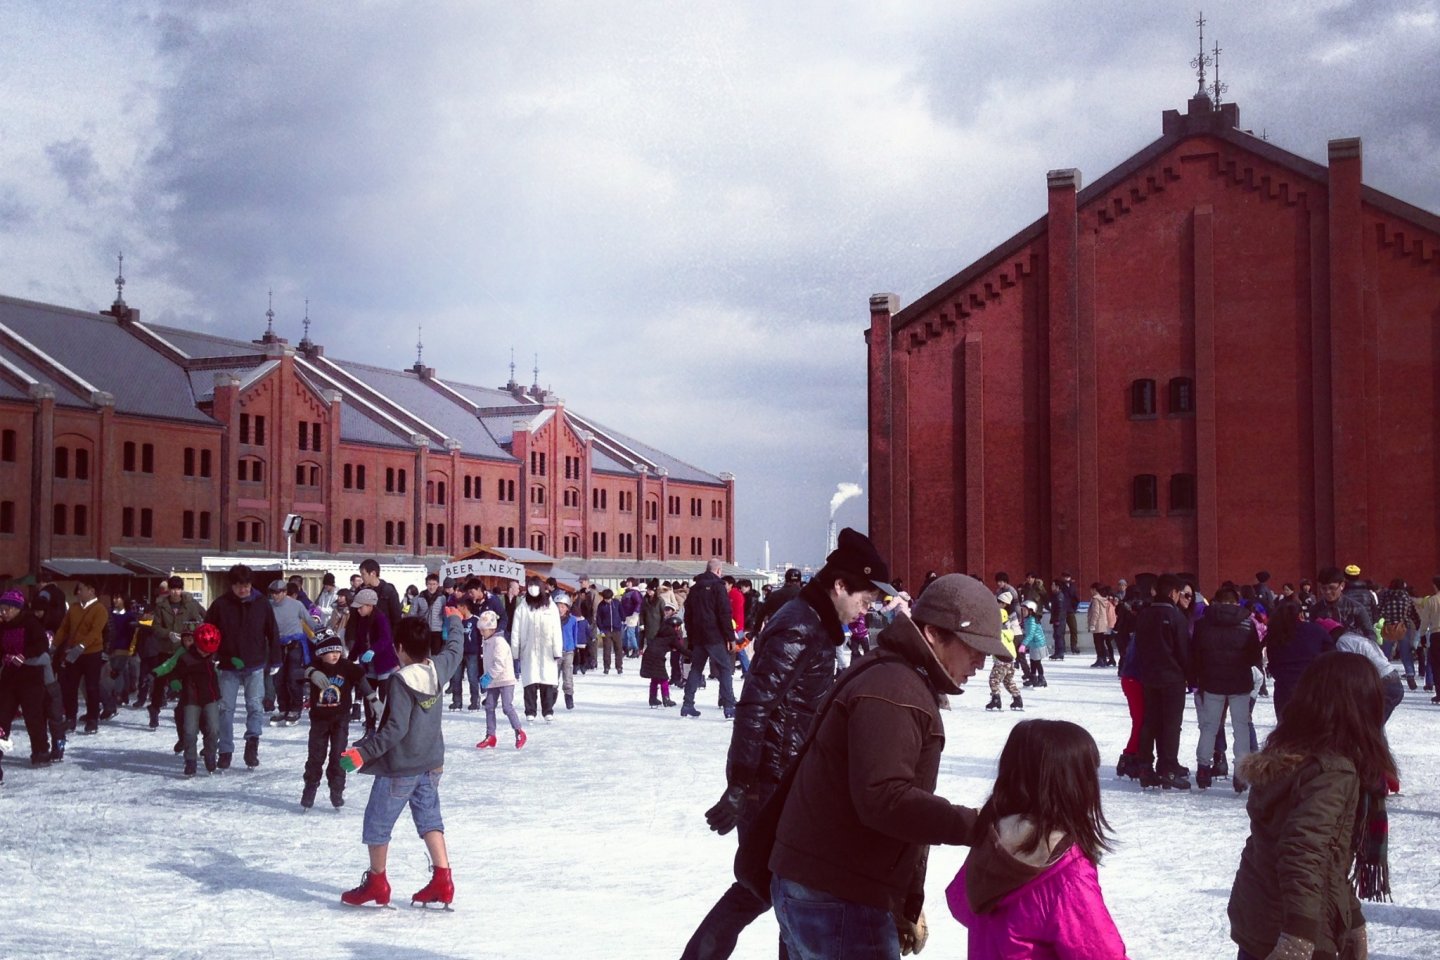 Outdoor ice-skating rink next to Yokohama red brick warehouse- 3